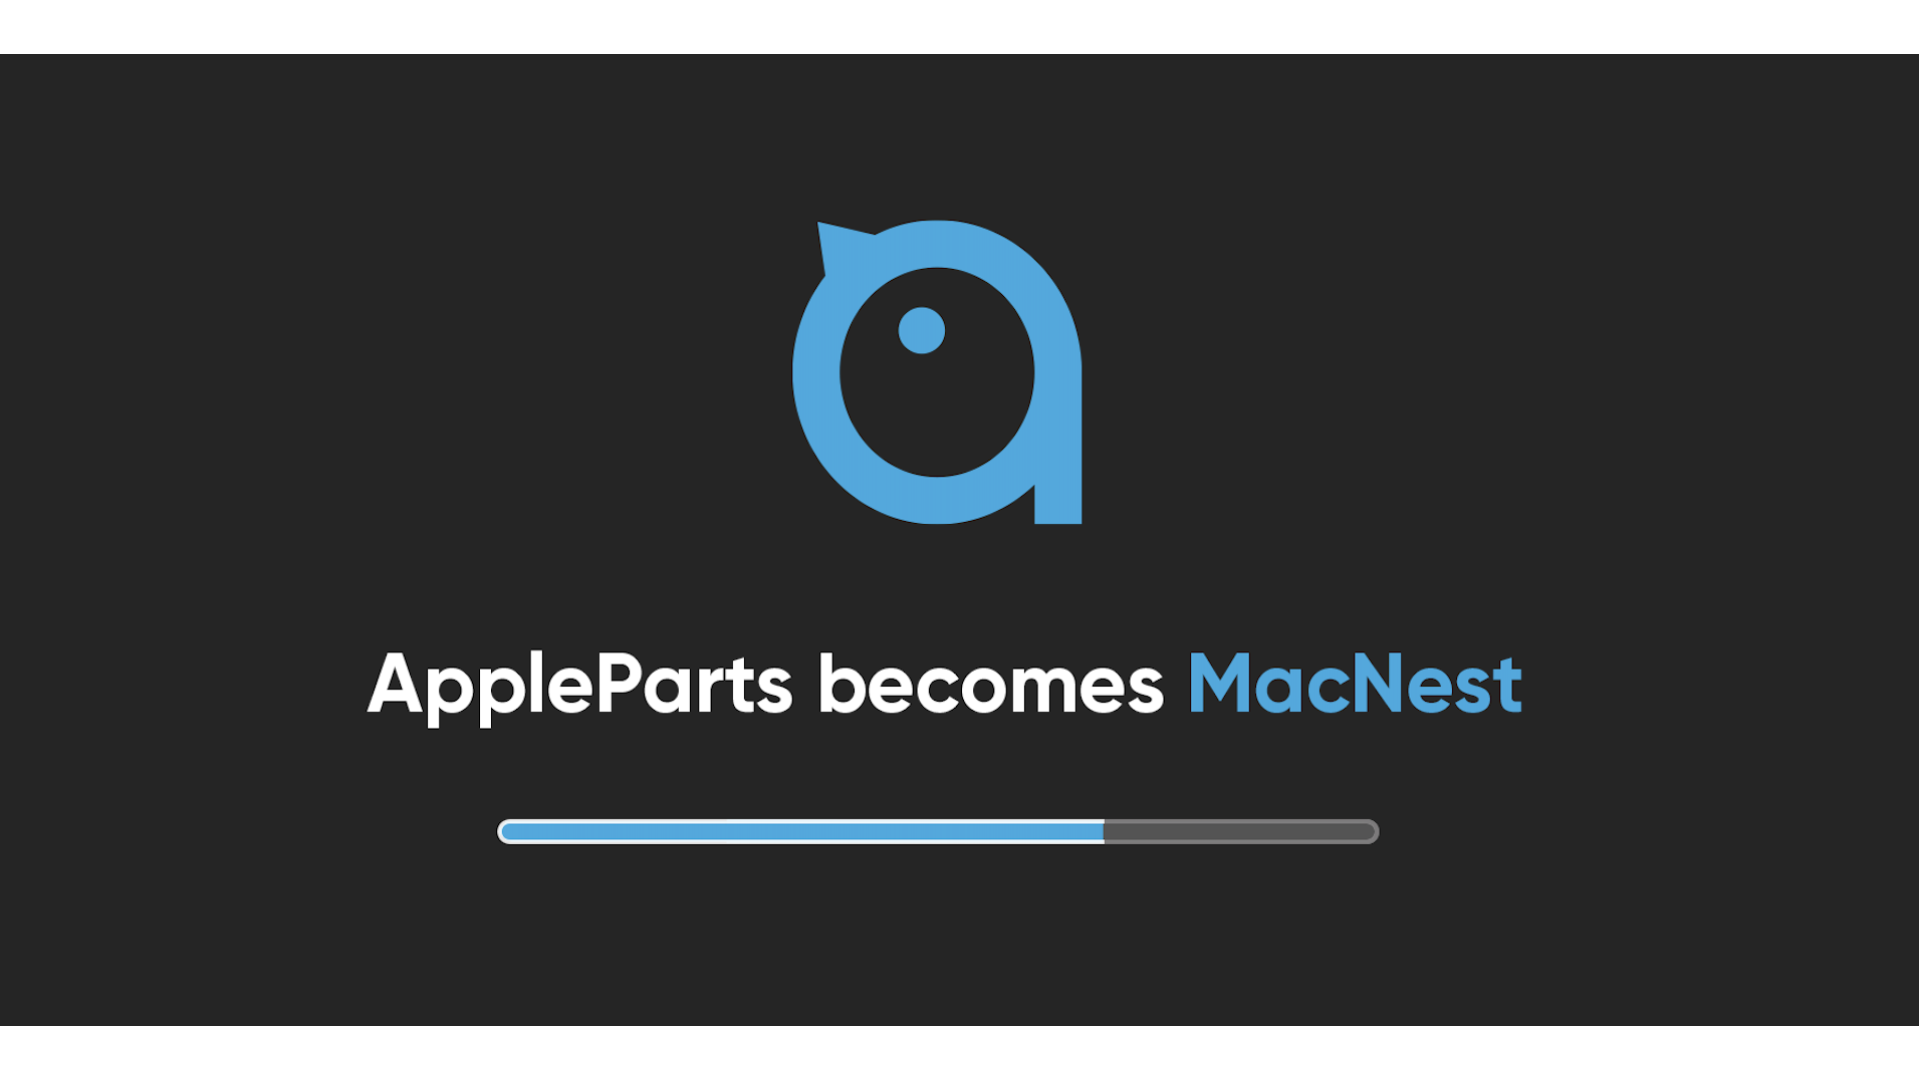 https://macnest.com/image/cache/catalog/AppleParts-becomes-MacNest-1920x1080.png